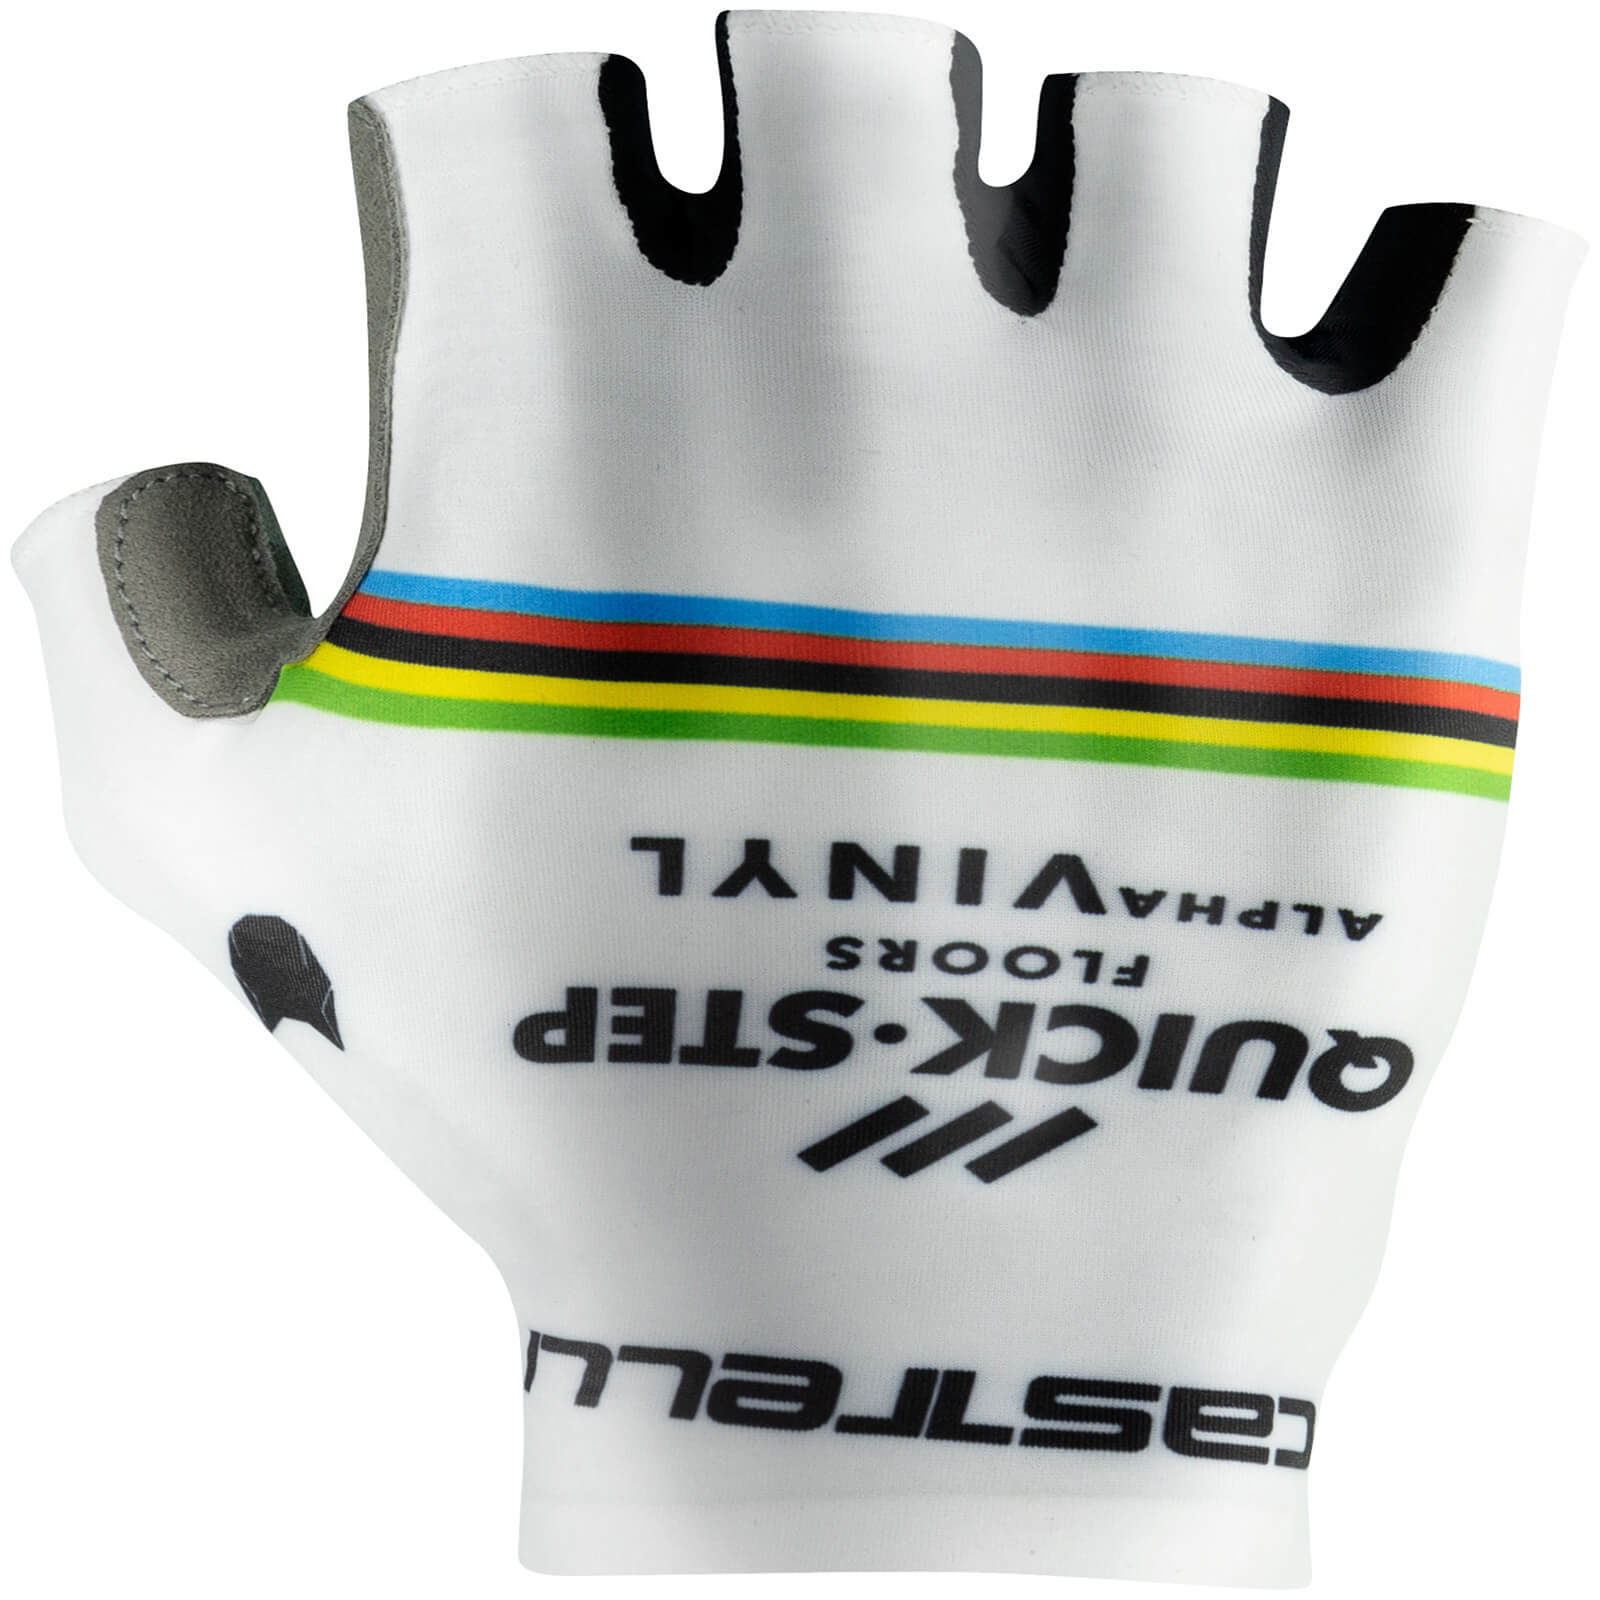 Castelli Quick-Step Alpha Vinyl Pro Team Competizione World Champion Gloves - S